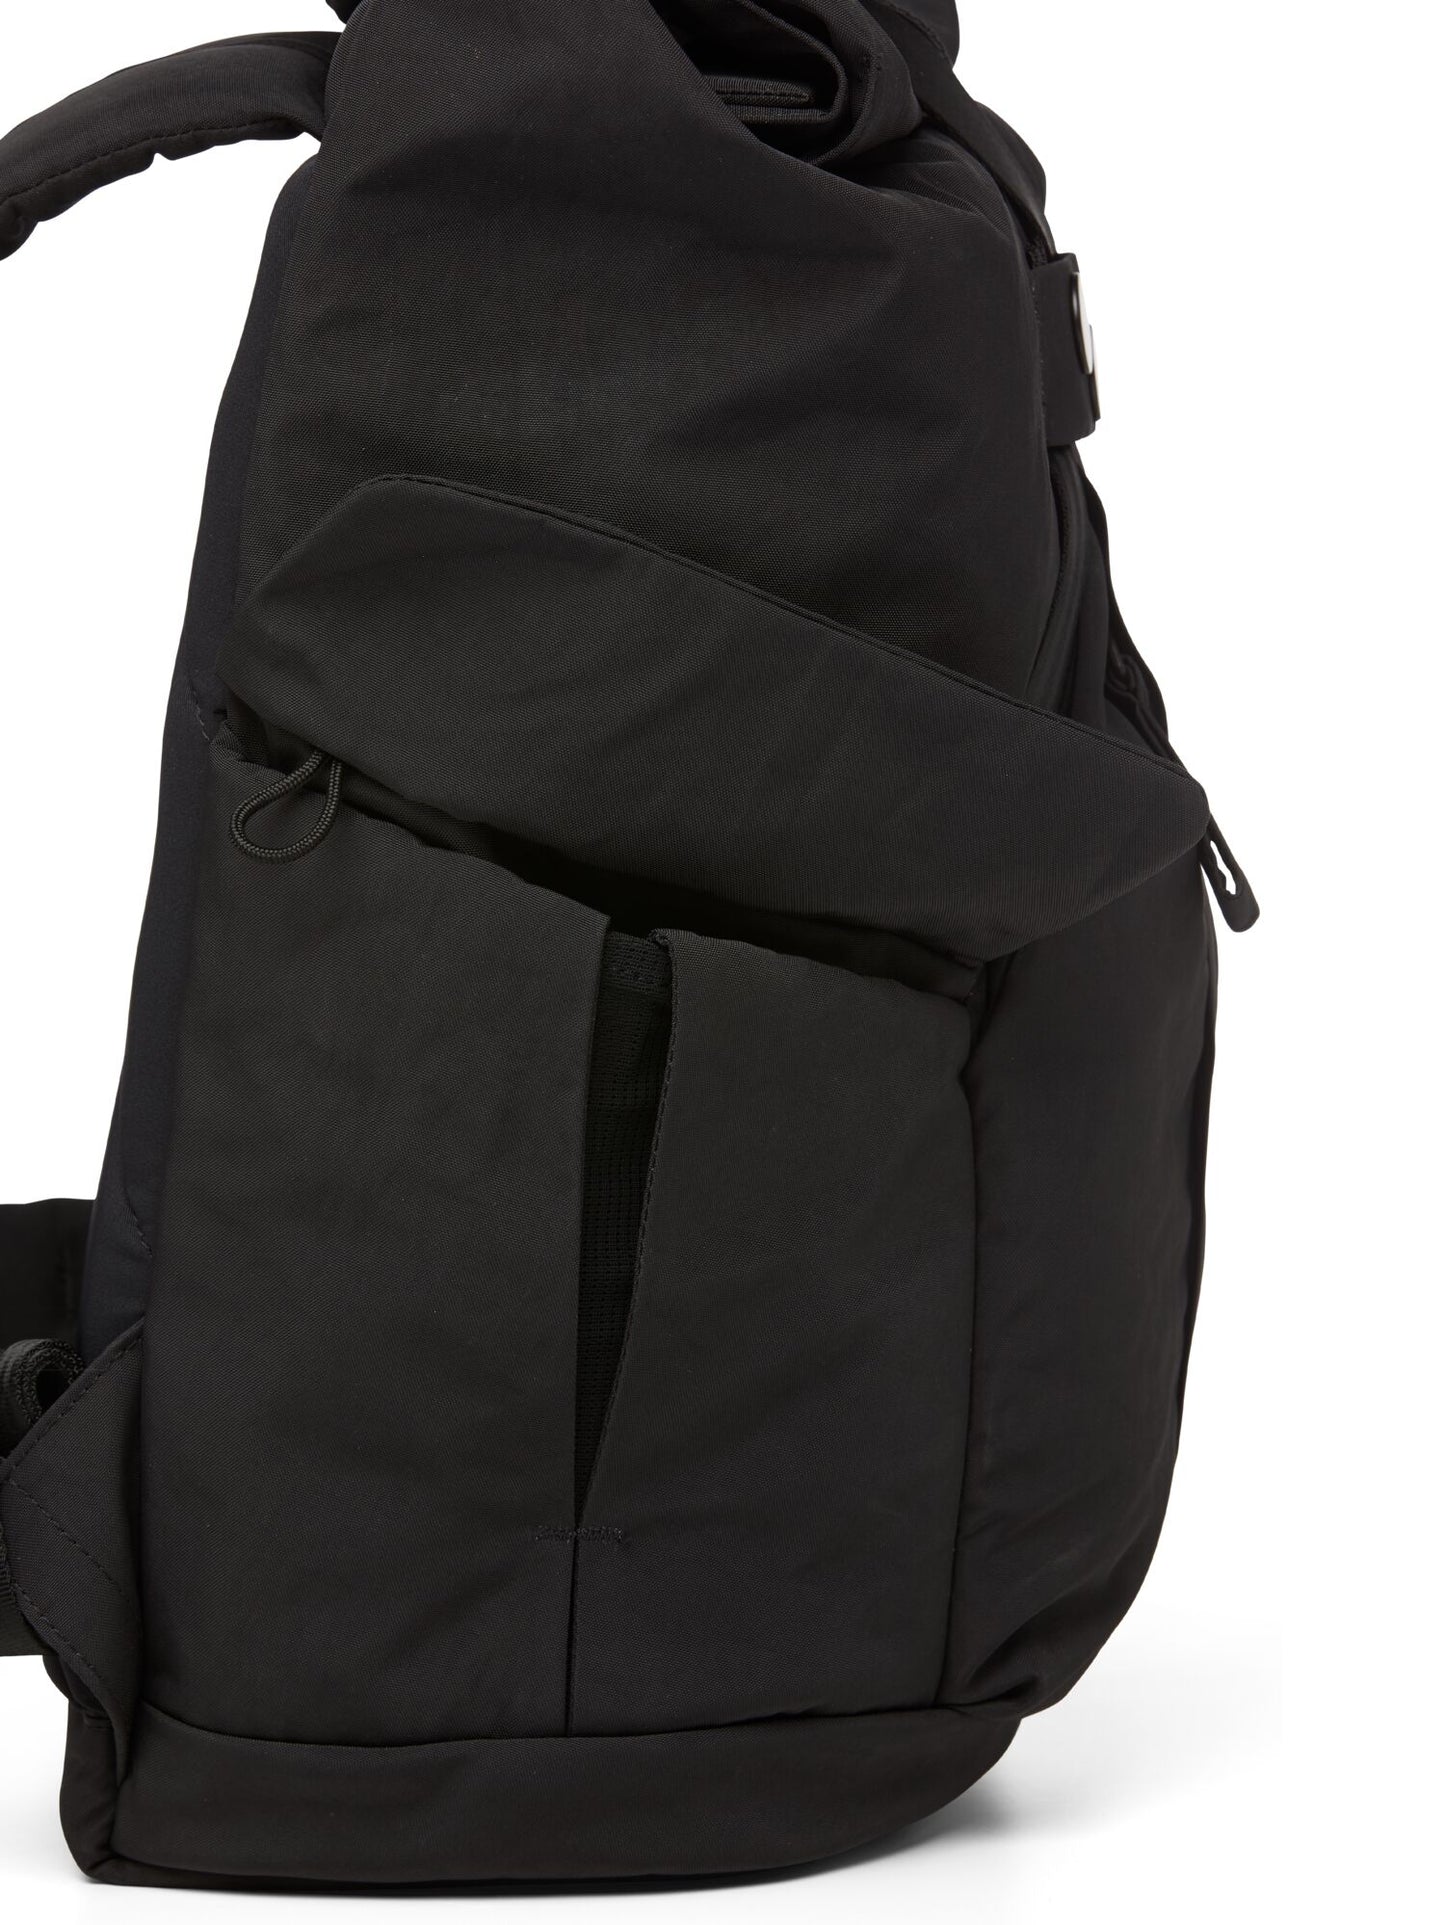 pinqponq-backpack-Kross-Crinkle-Black-side